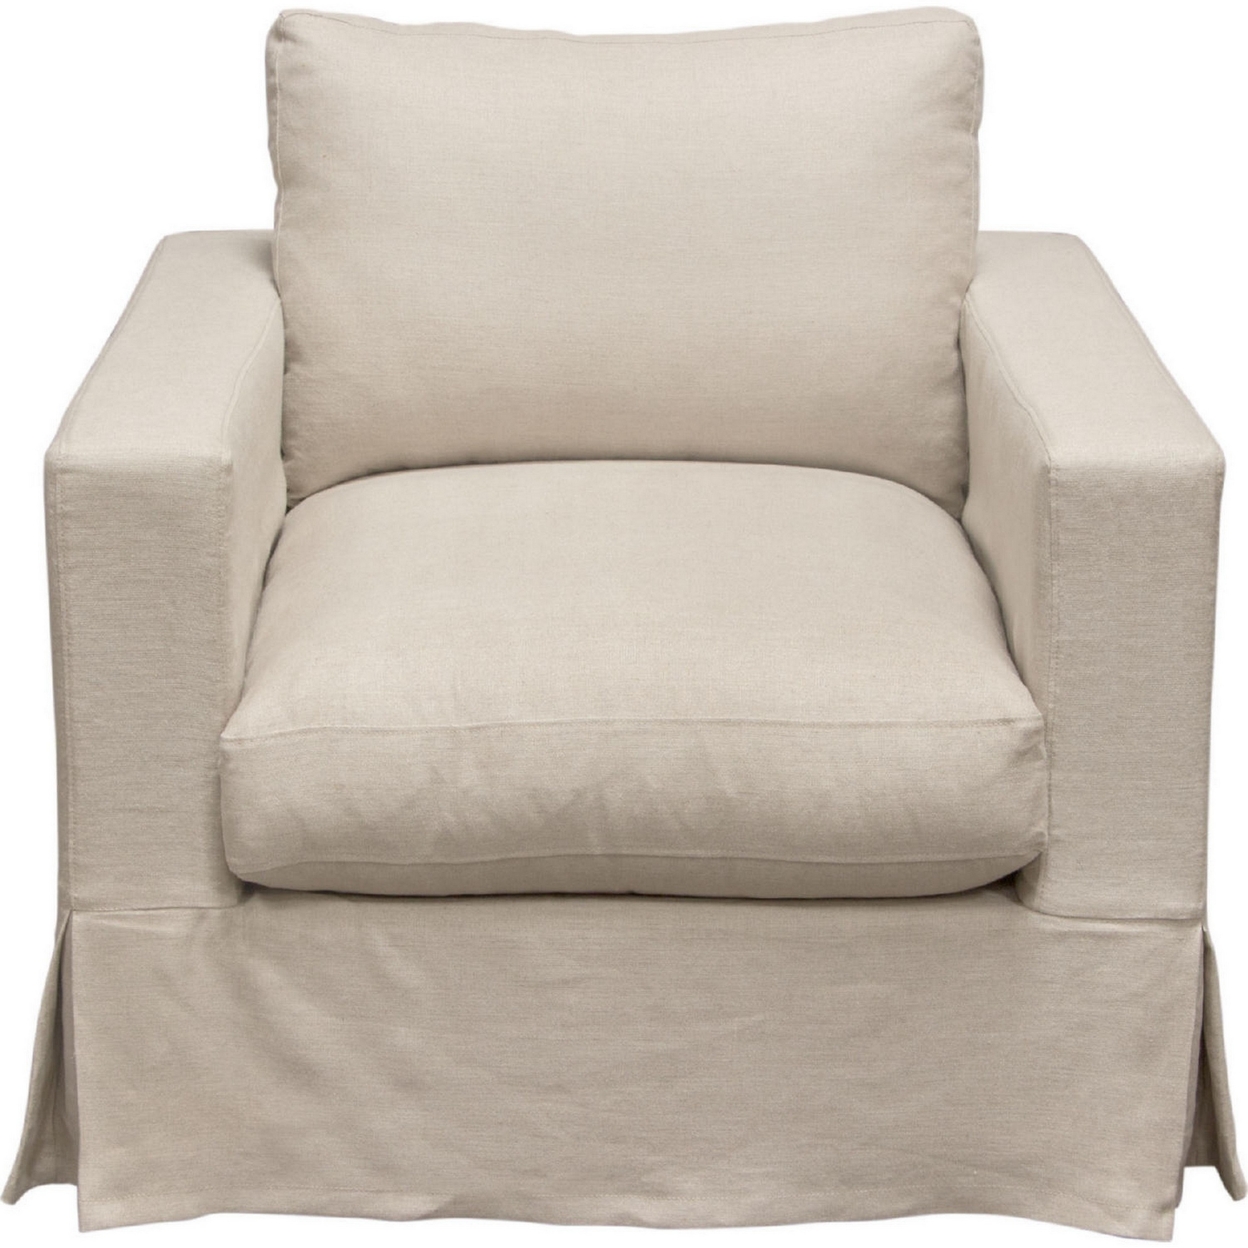 Aiza 35 Inch Armchair, Cushioned Seat And Backrest, Sand Beige Slipcover- Saltoro Sherpi